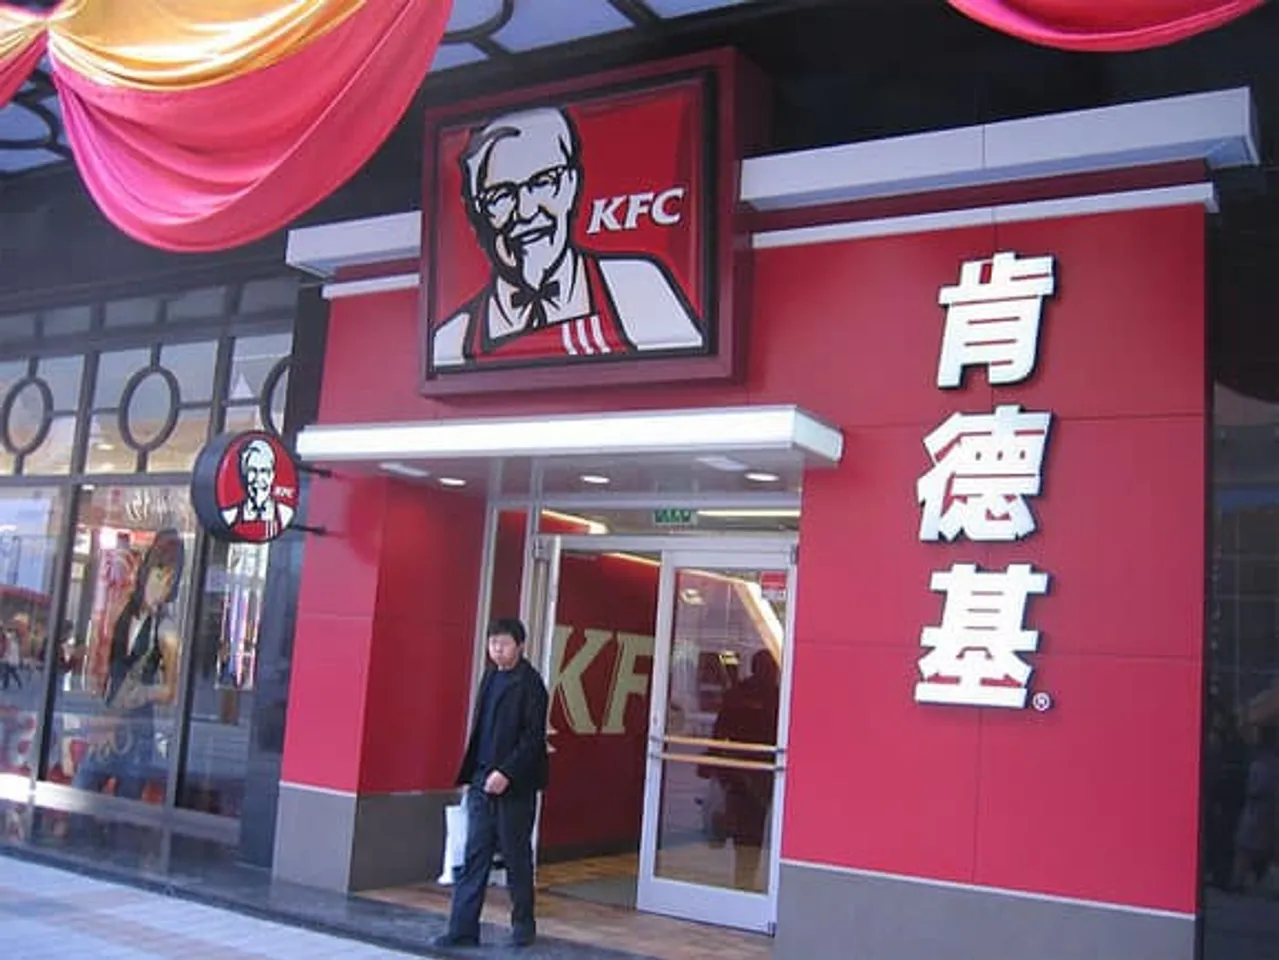 KFC enhances customer's experience with AI-enabled restaurant